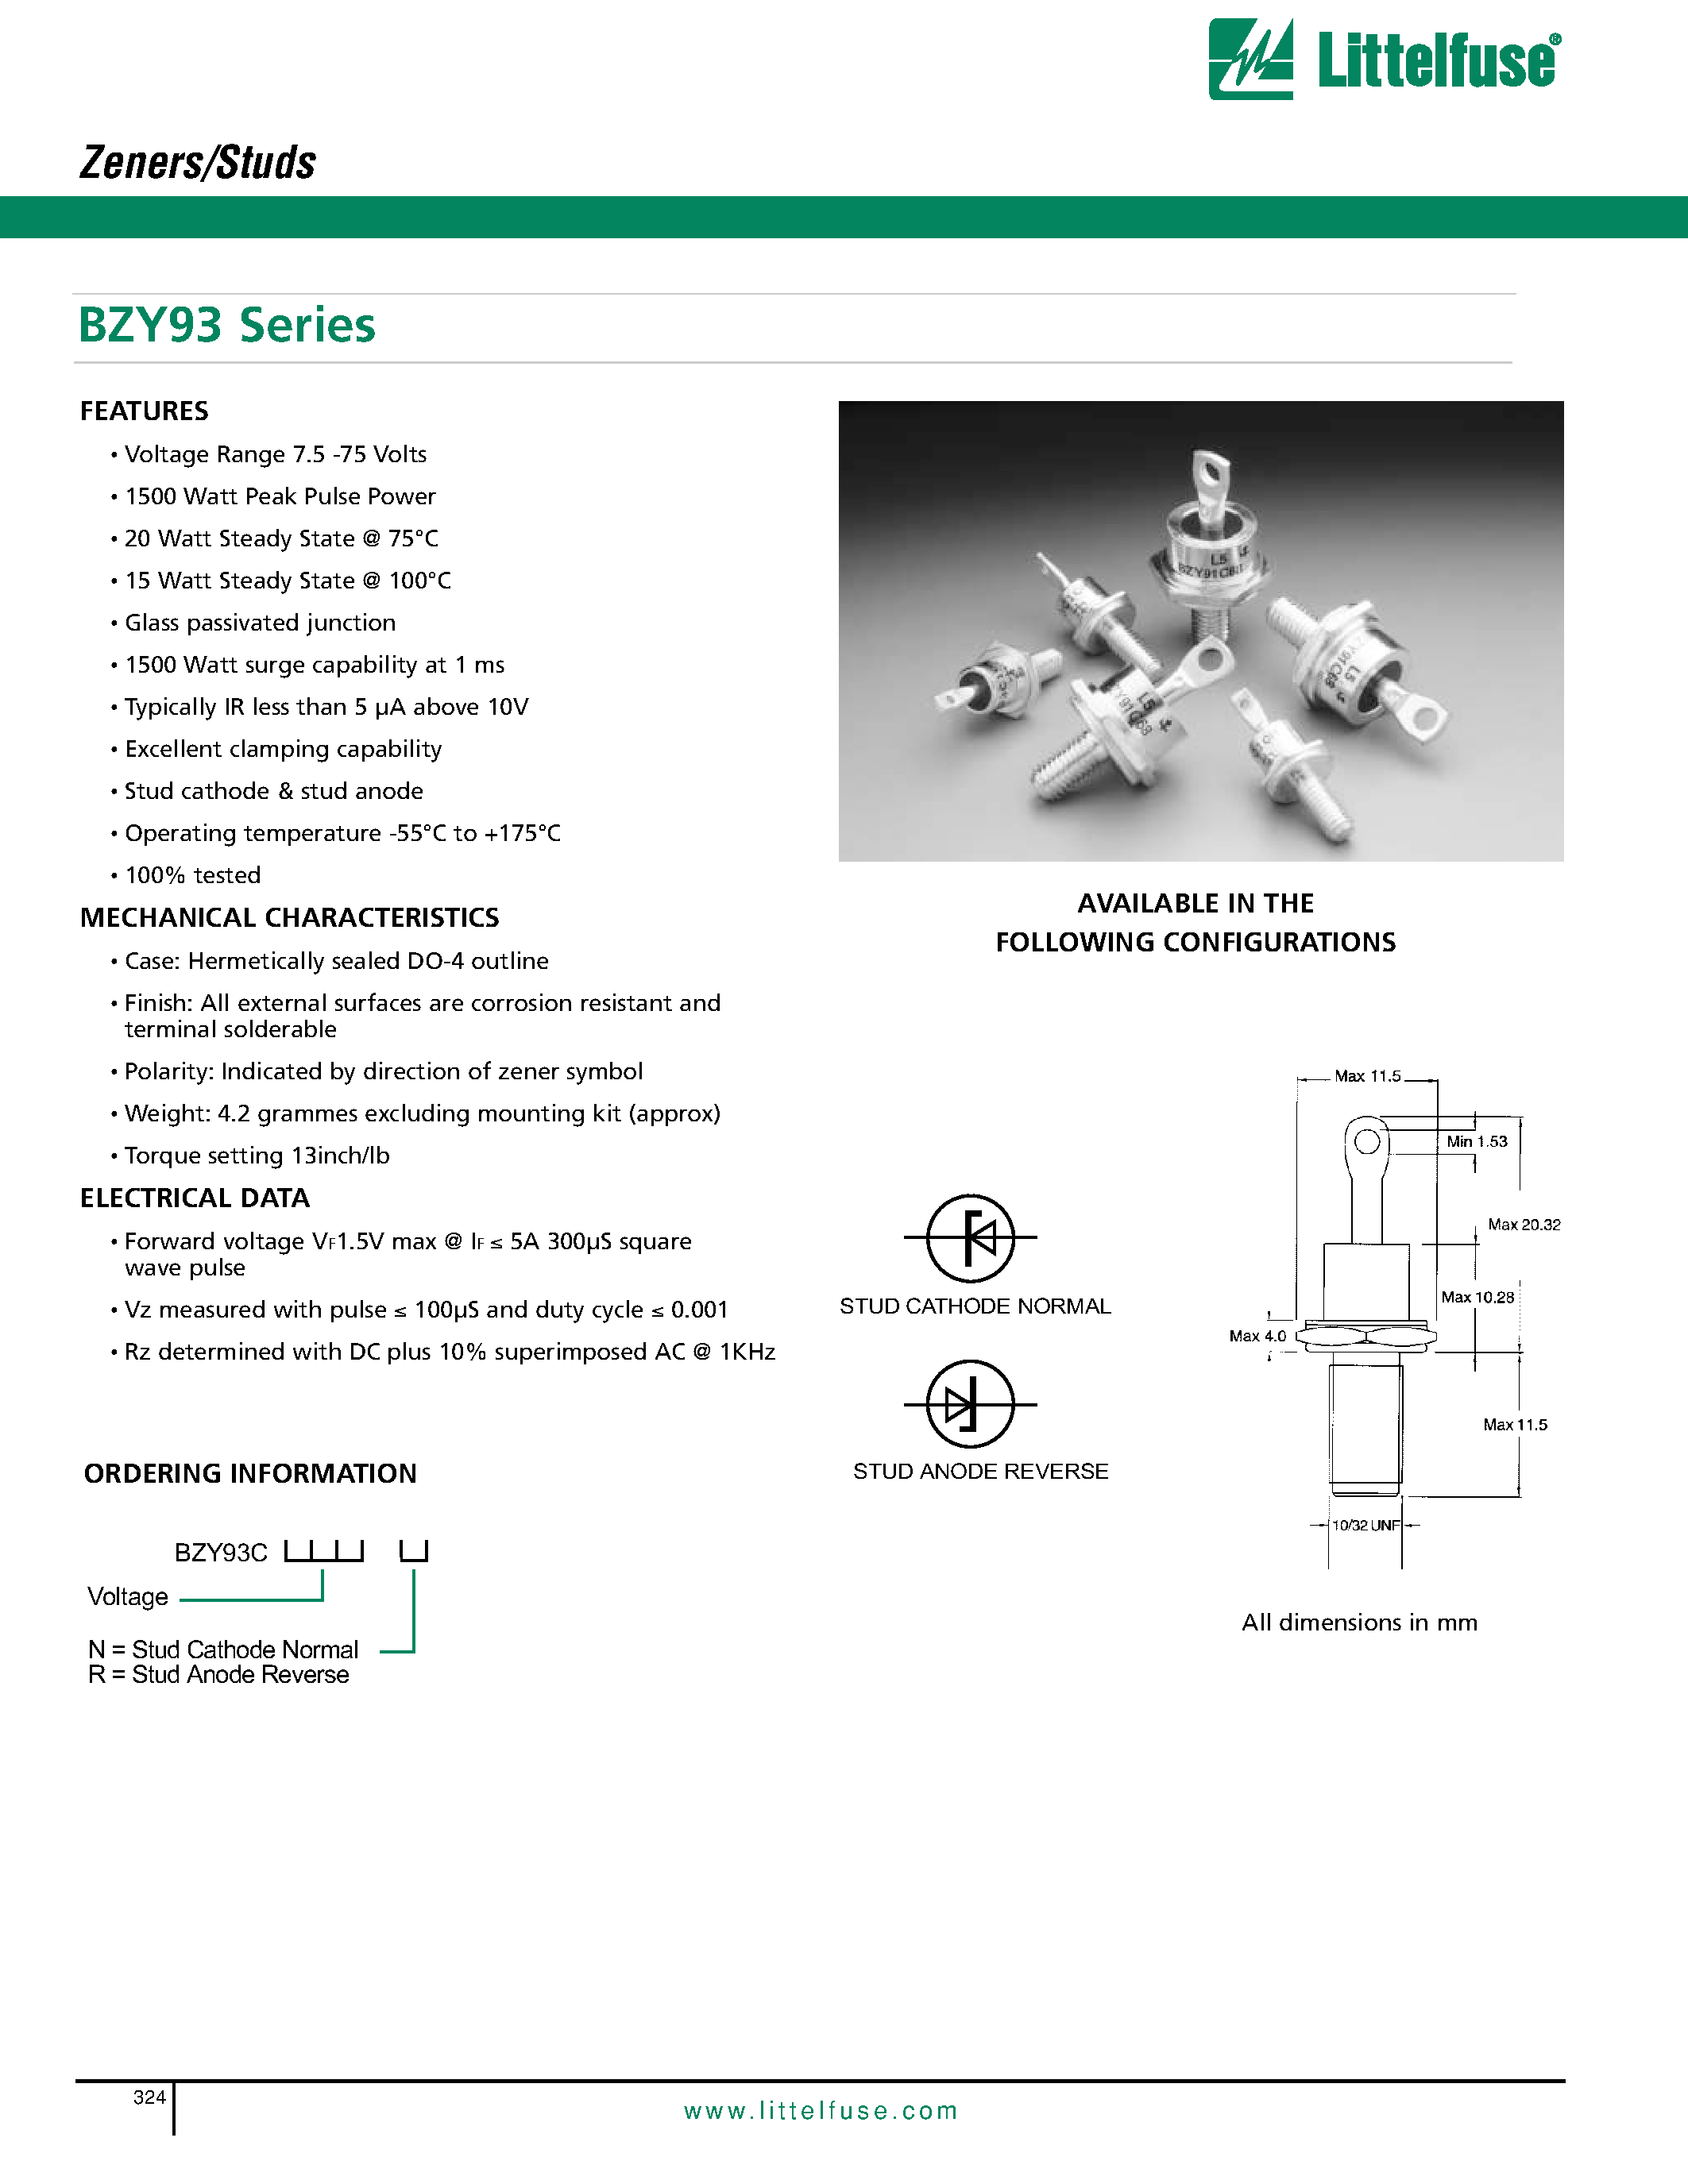 Даташит BZY93C-N - BZY93 Series страница 1